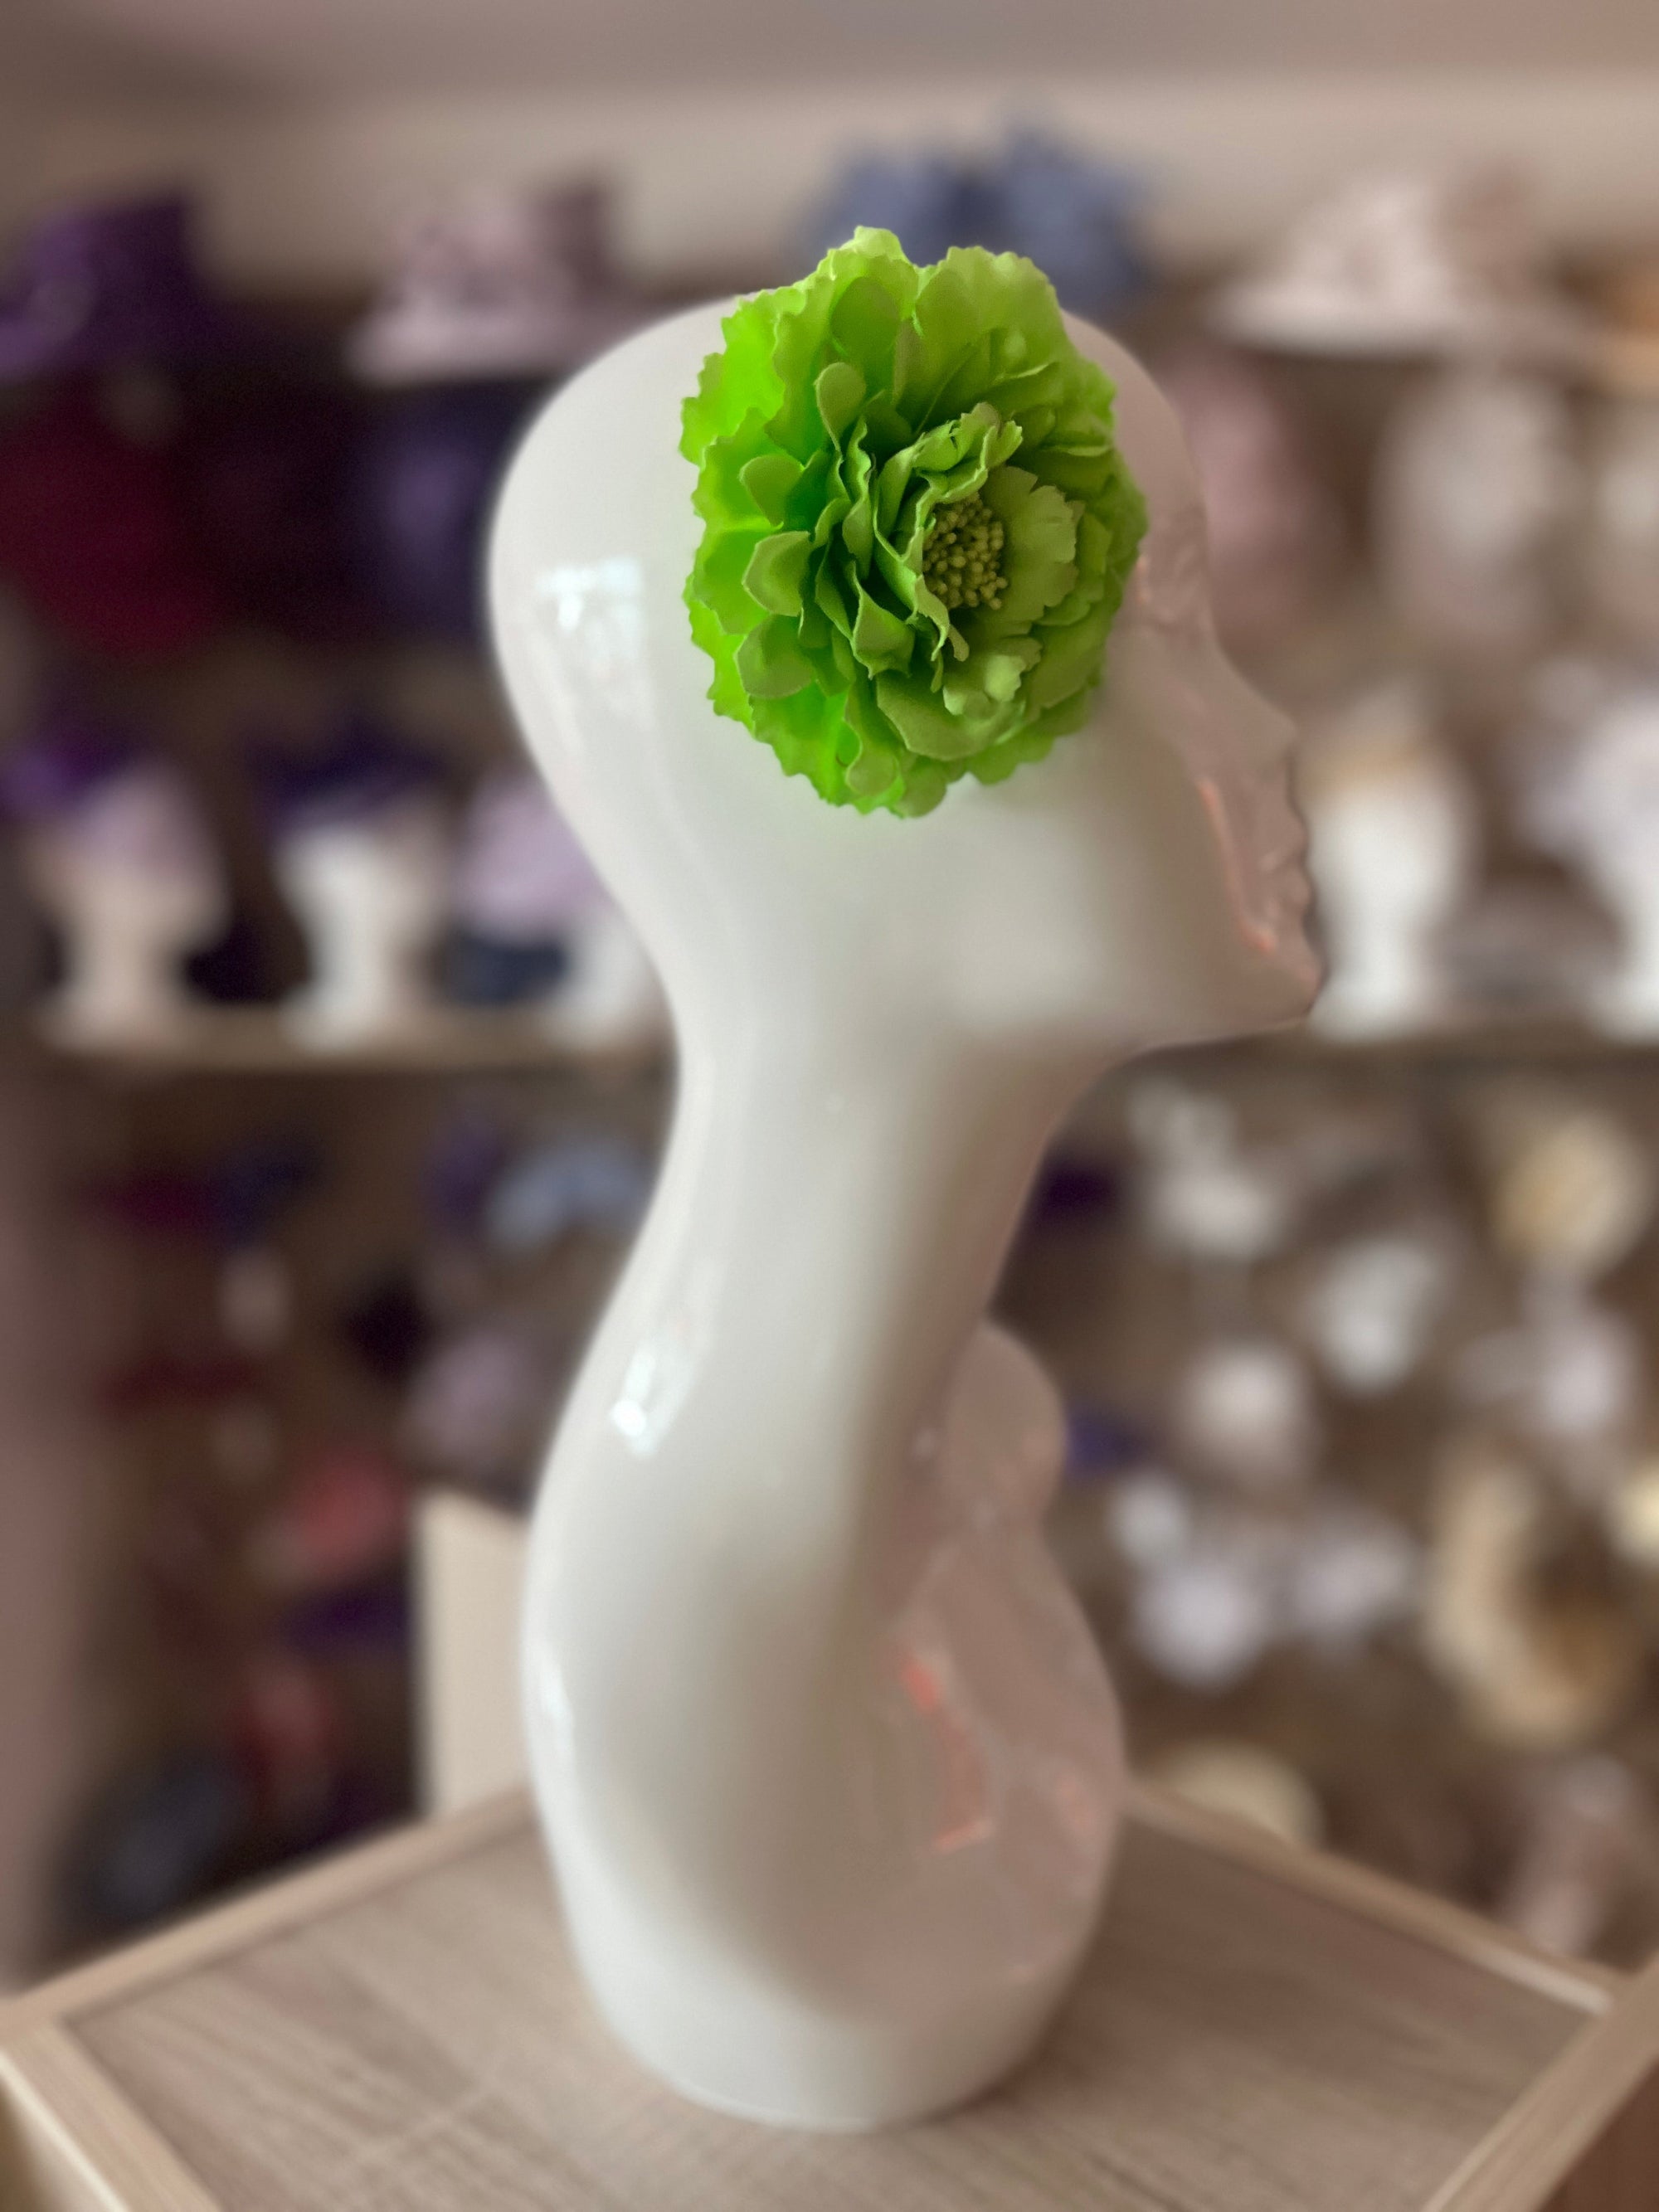 Lime Green Hair Flower Fascinator Clip-Fascinators Direct